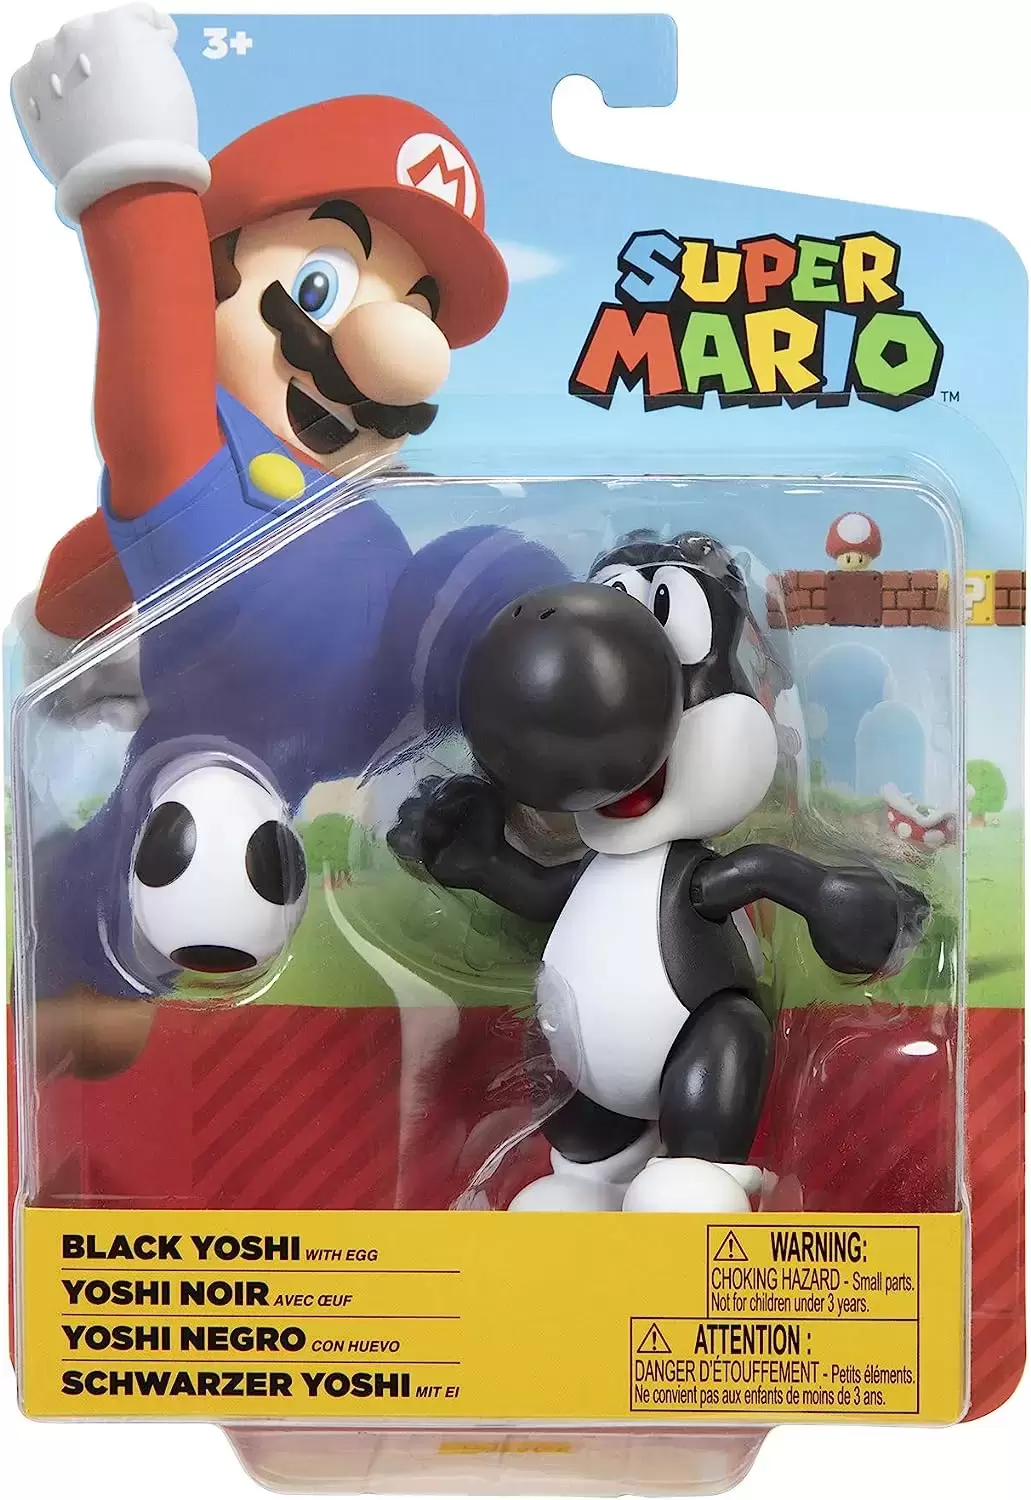 World of Nintendo - Black Yoshi with Egg